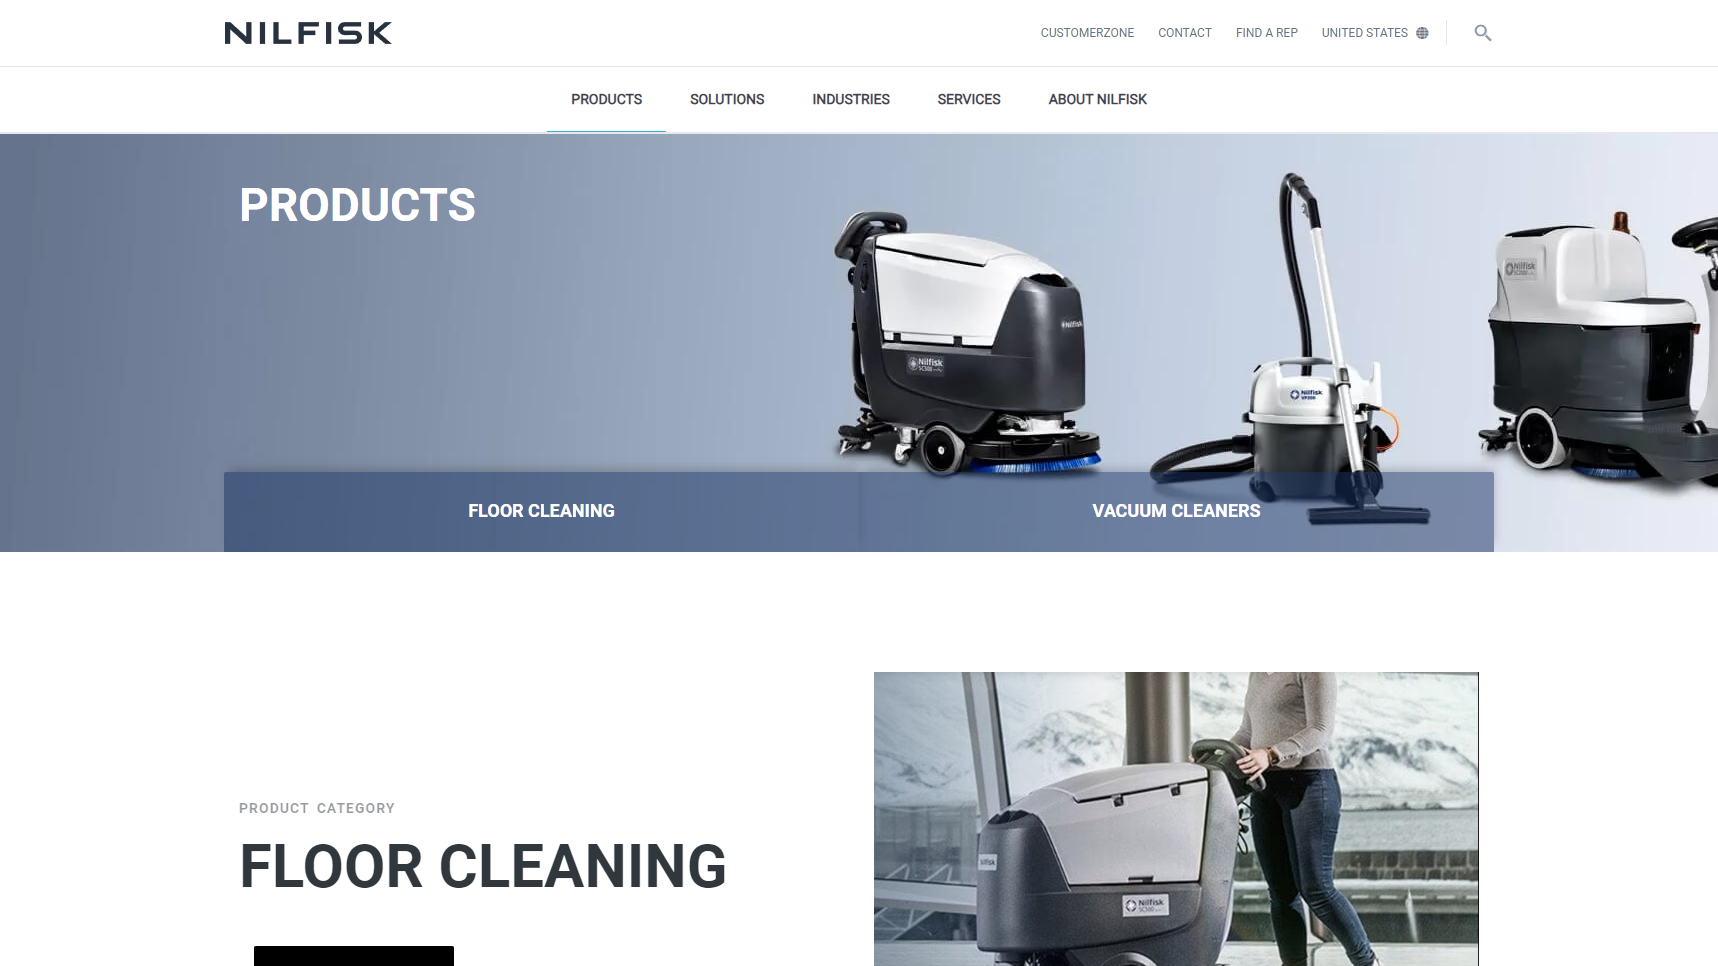 Nilfisk - Cleaning Equipment Manufacturer